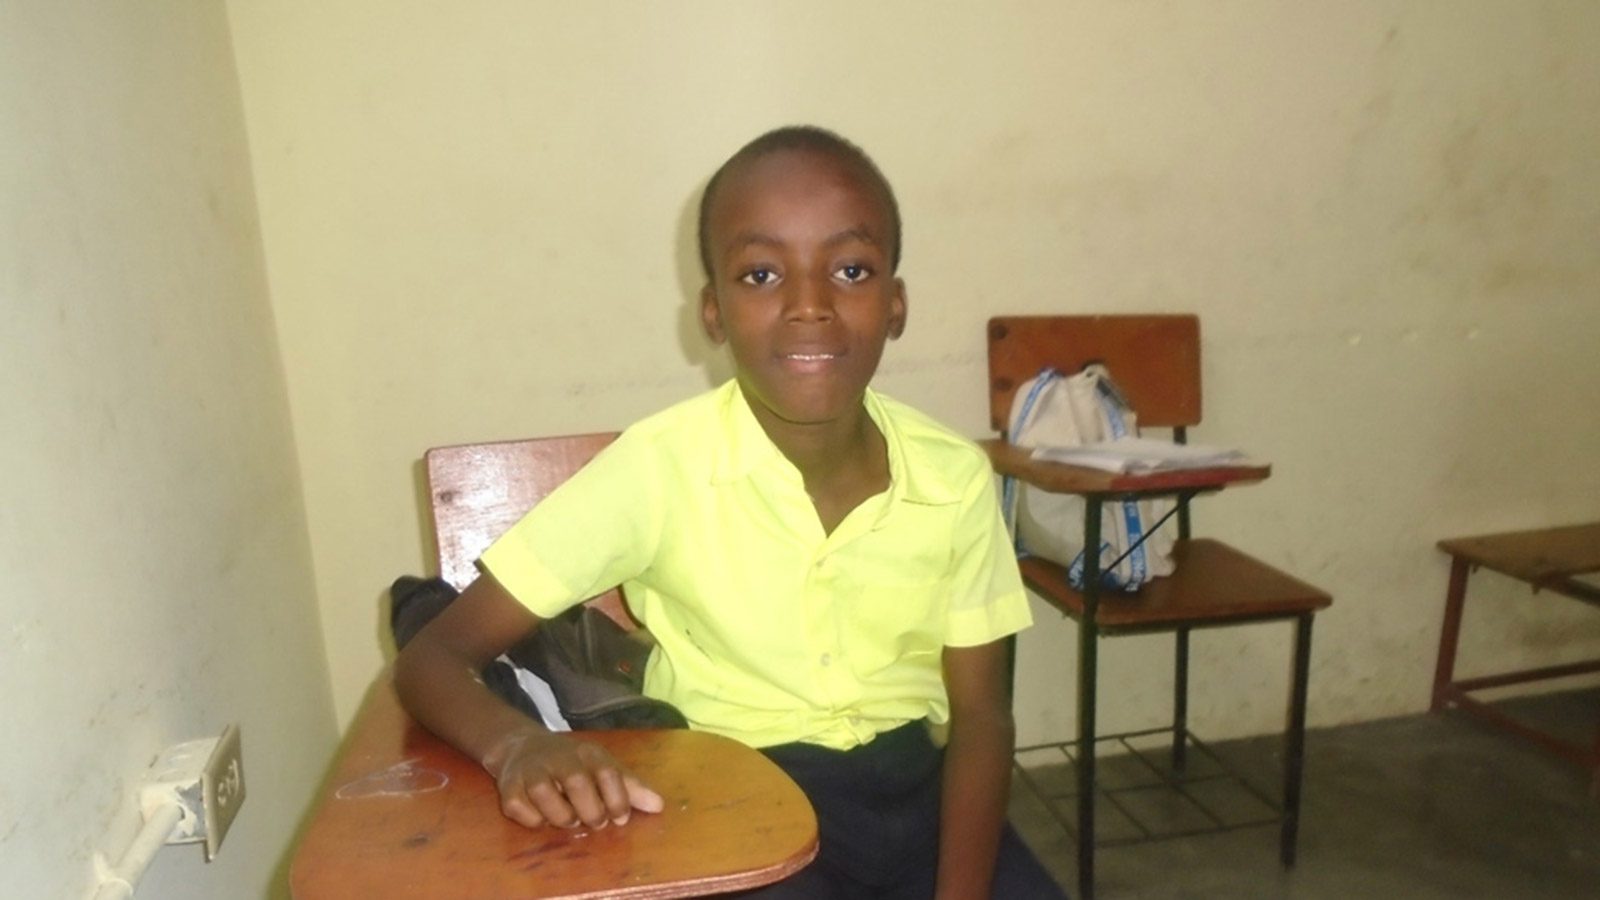 Sponsored child Samuel in a school uniform in a classroom in Haiti